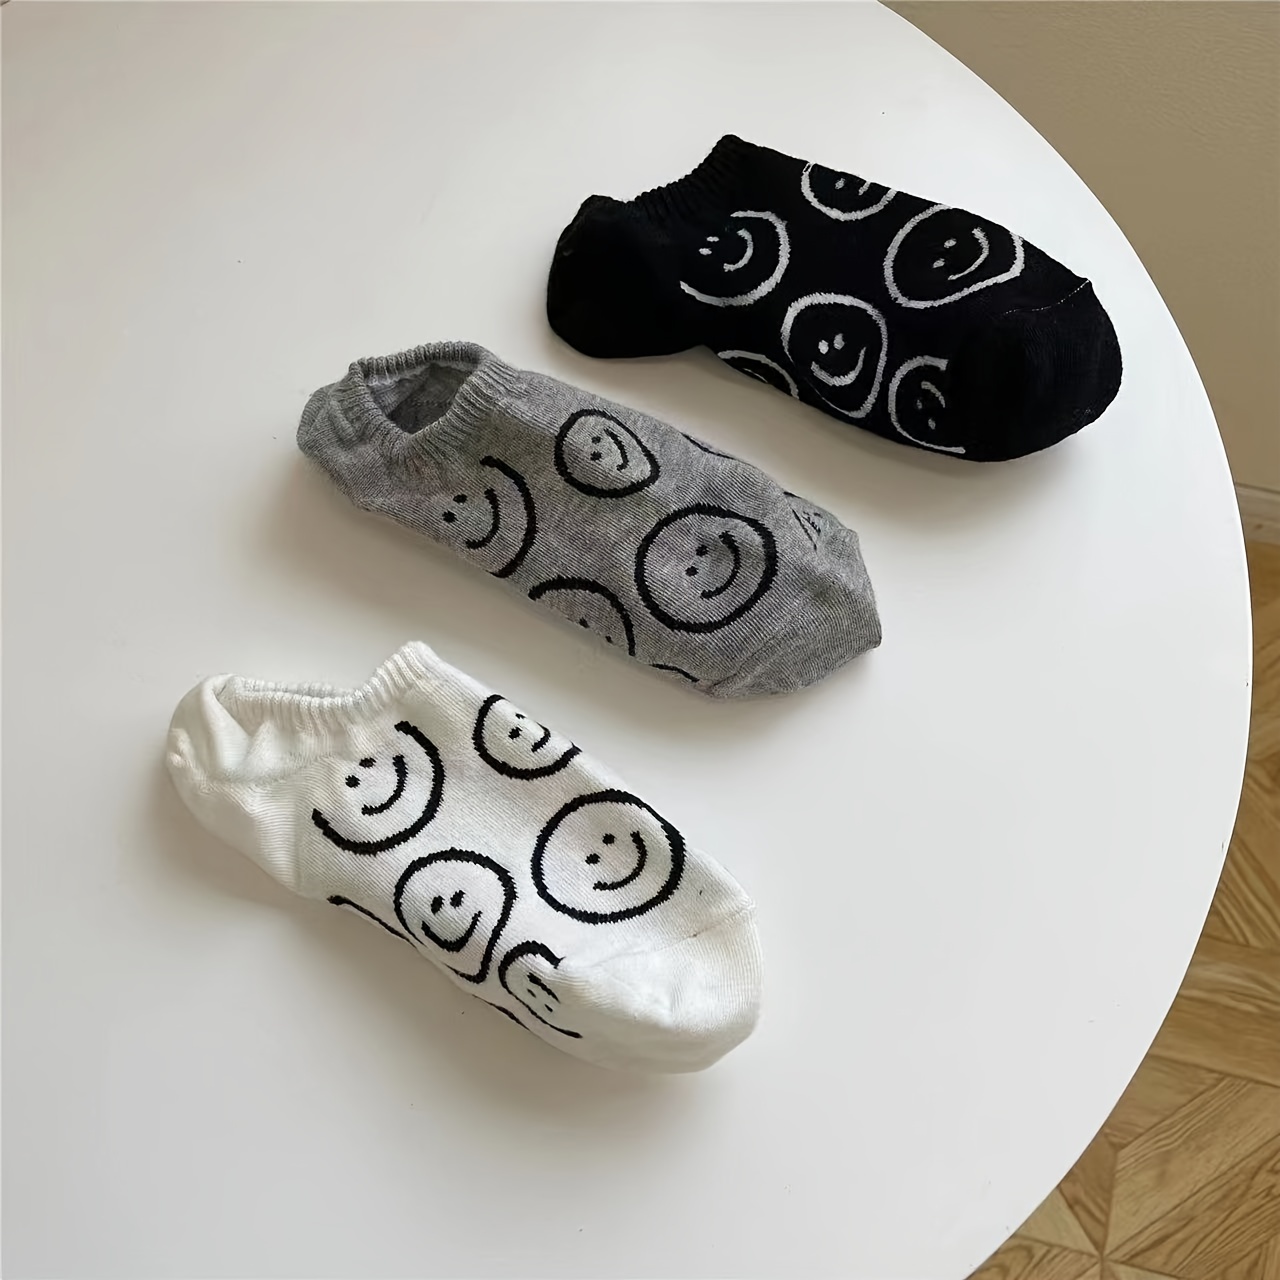 3 pairs smiling print socks soft lightweight low cut ankle socks womens stockings hosiery details 3